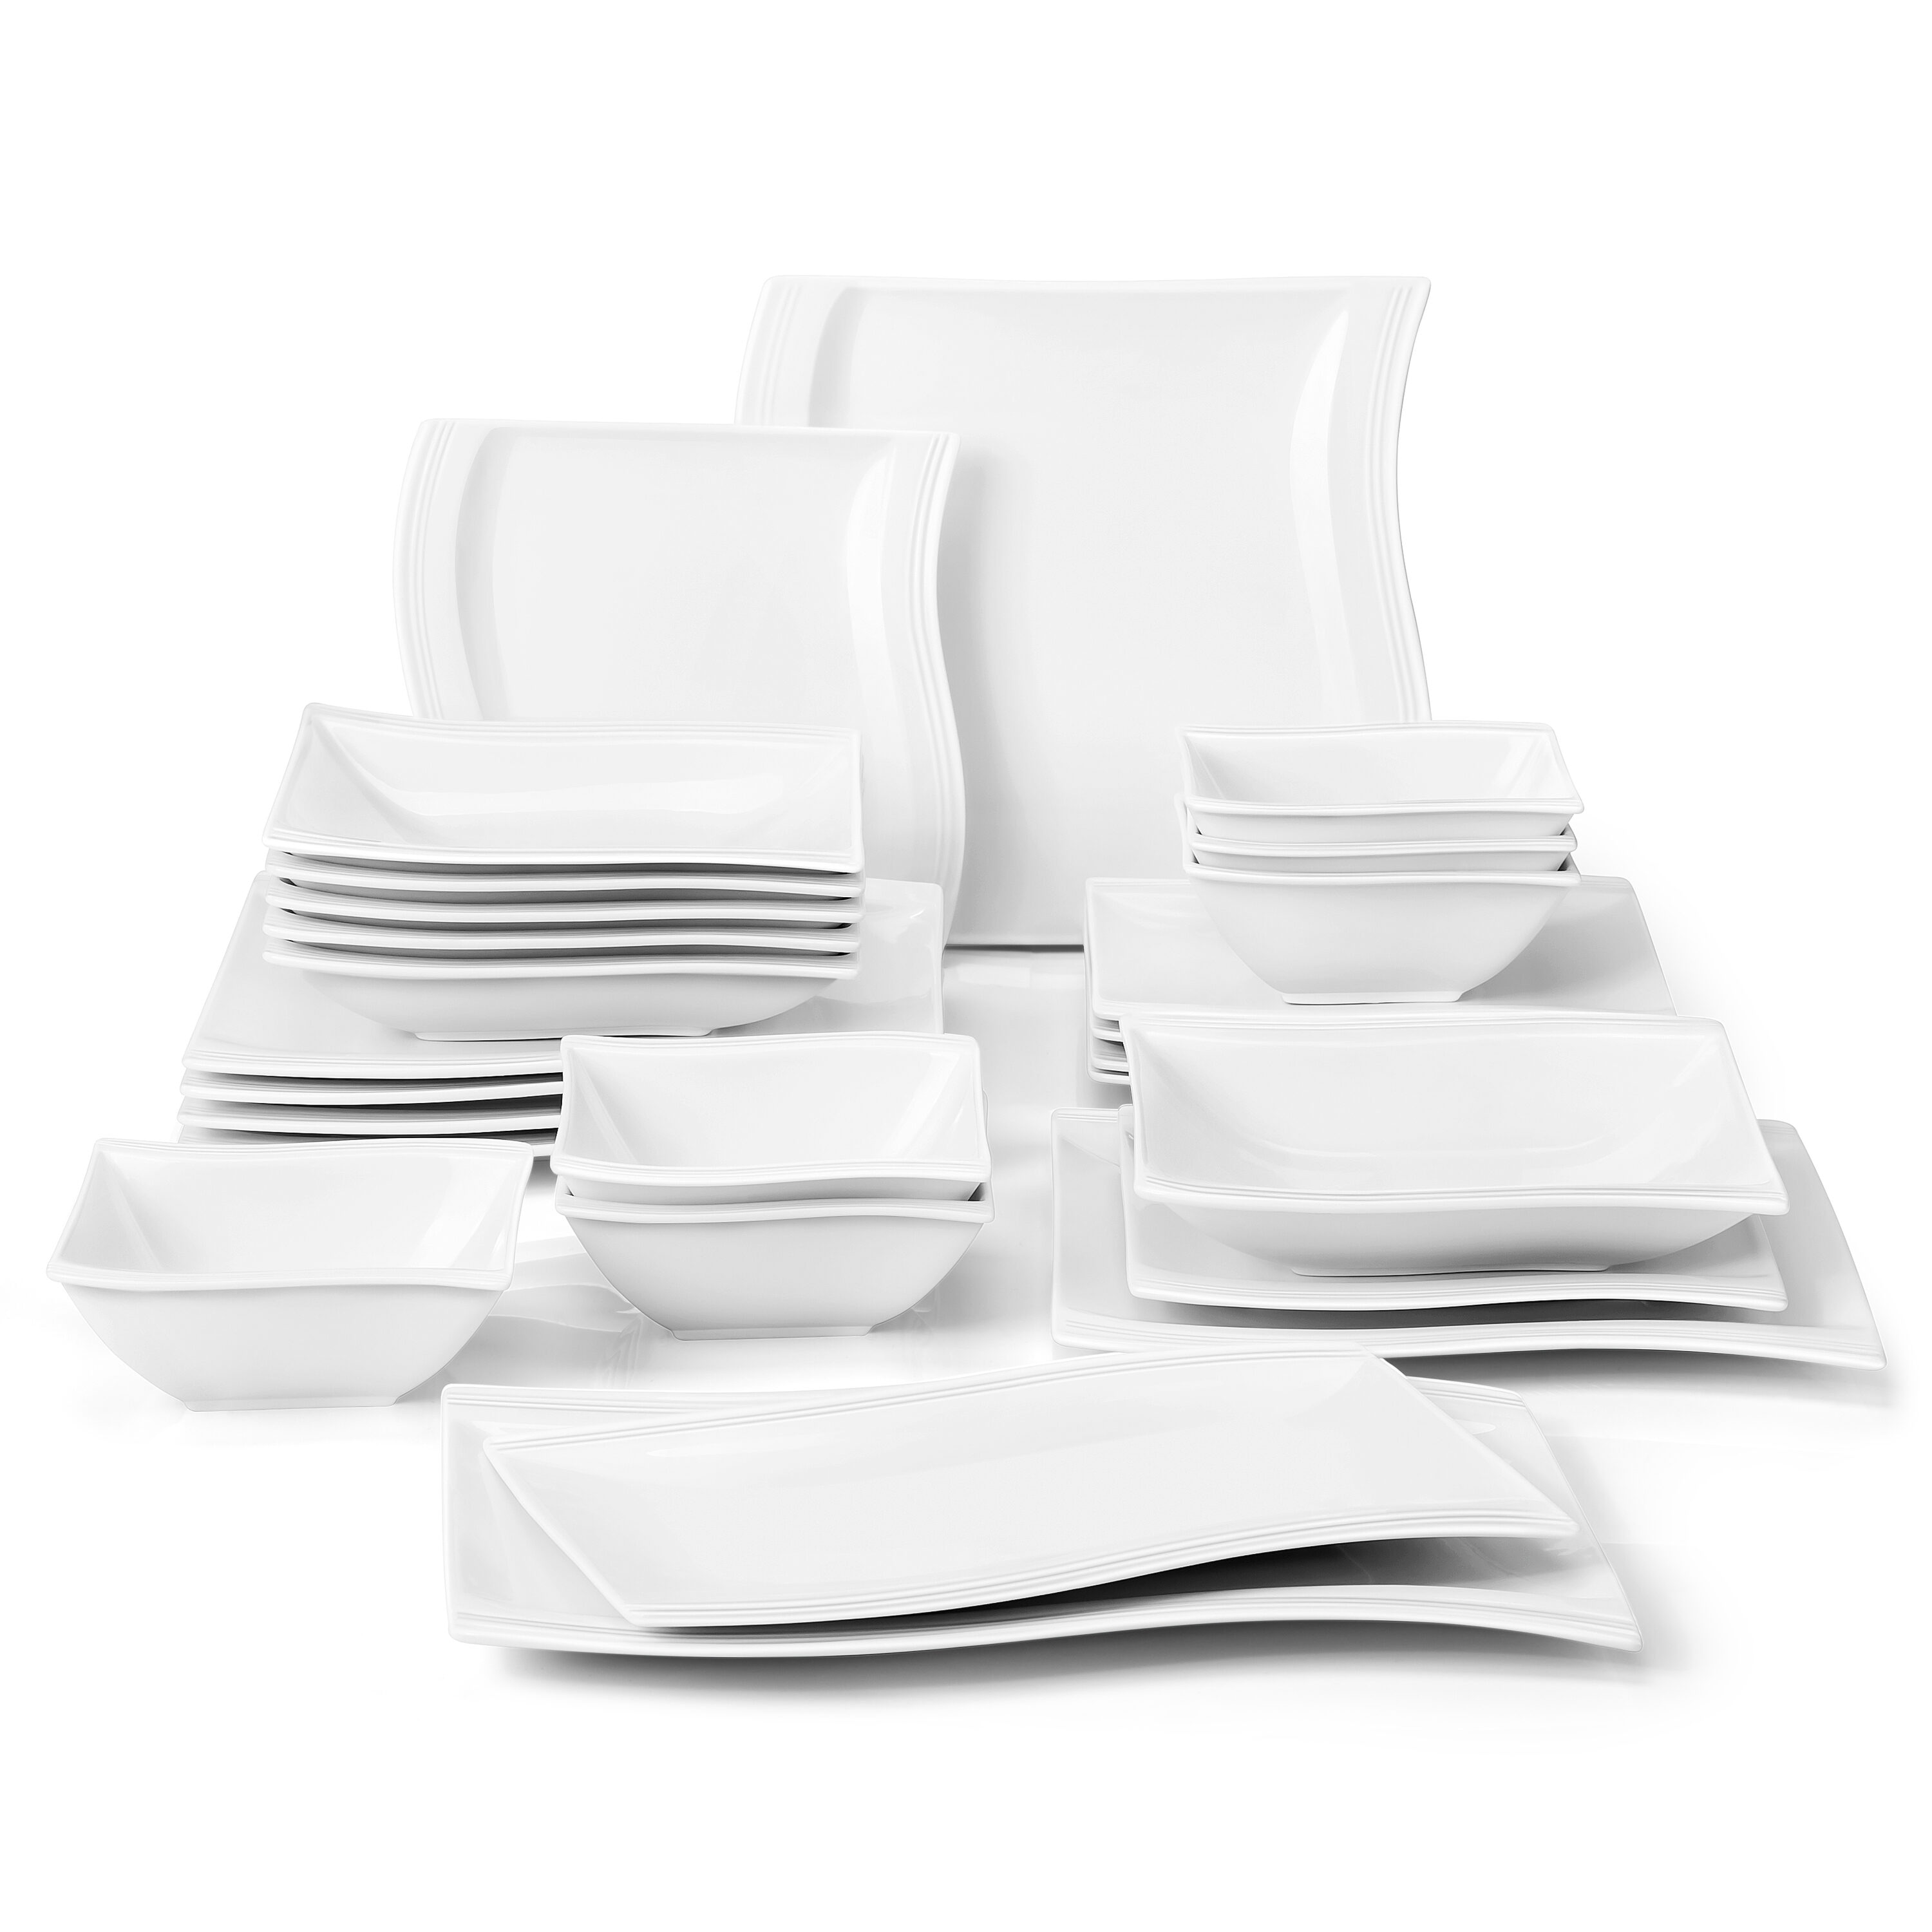 MALACASA 24-Piece White Porcelain Dinnerware in the Dinnerware